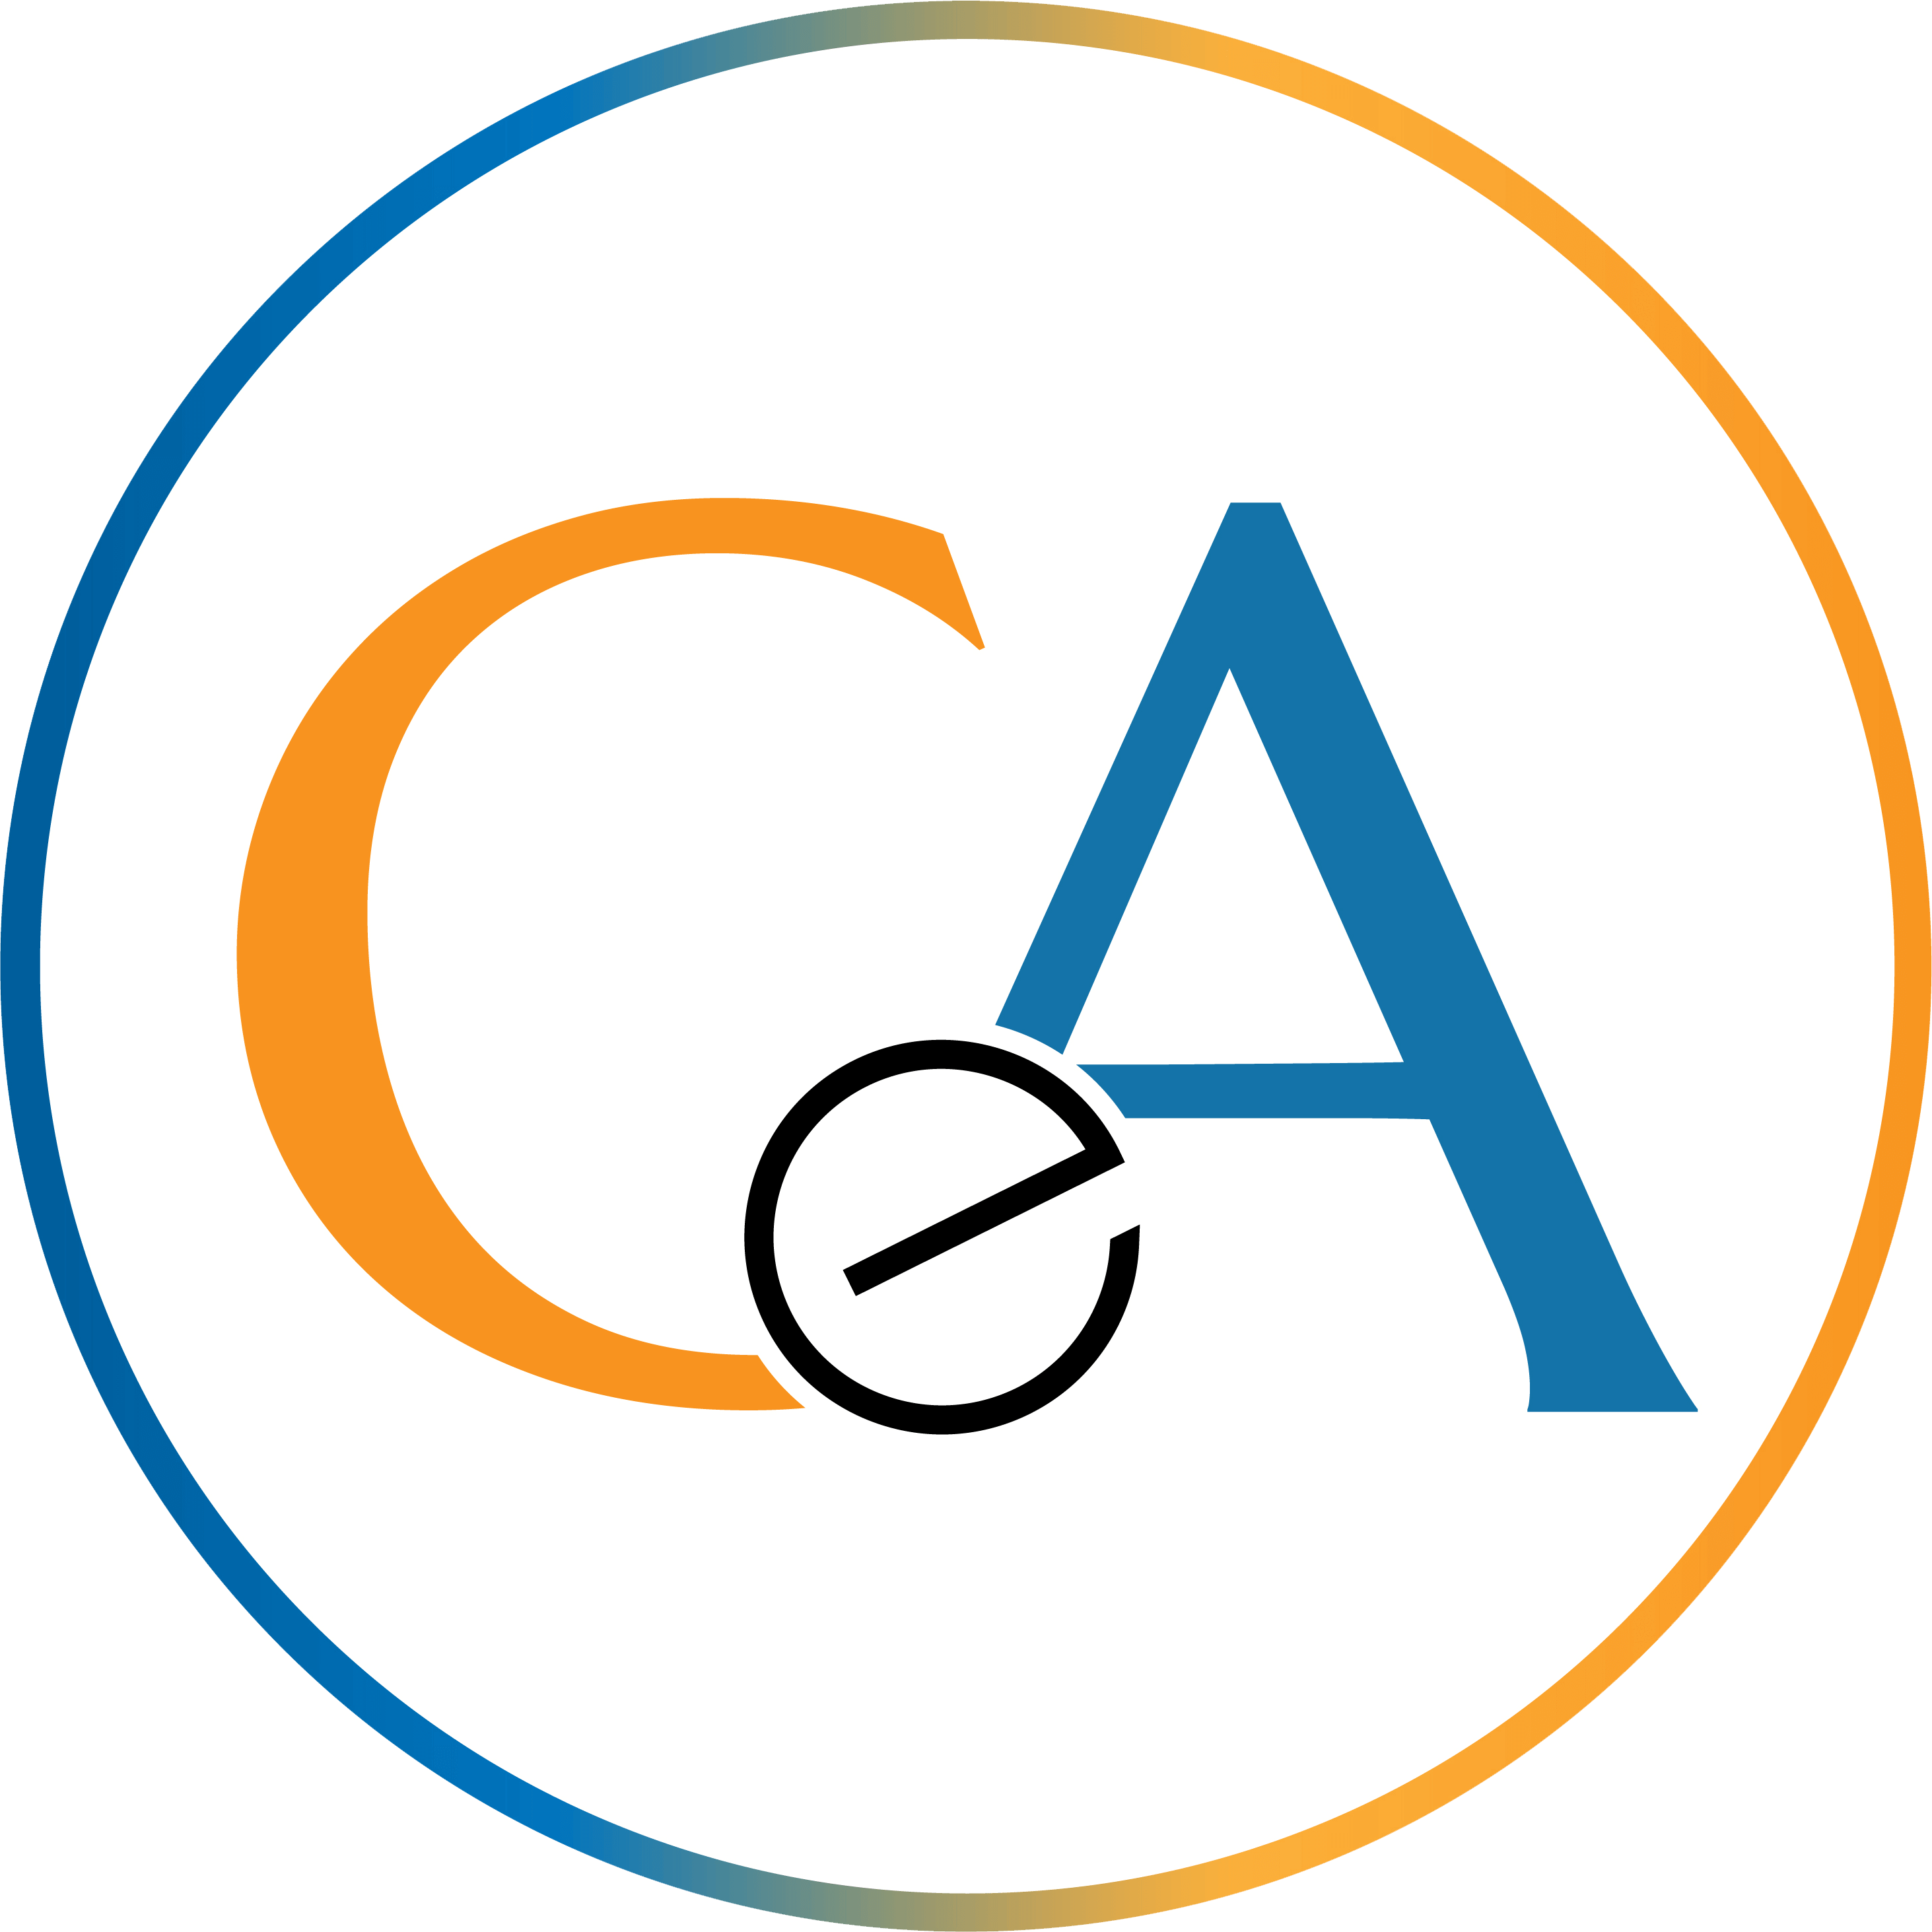 Logomarca CeA Contábil com fundo branco.